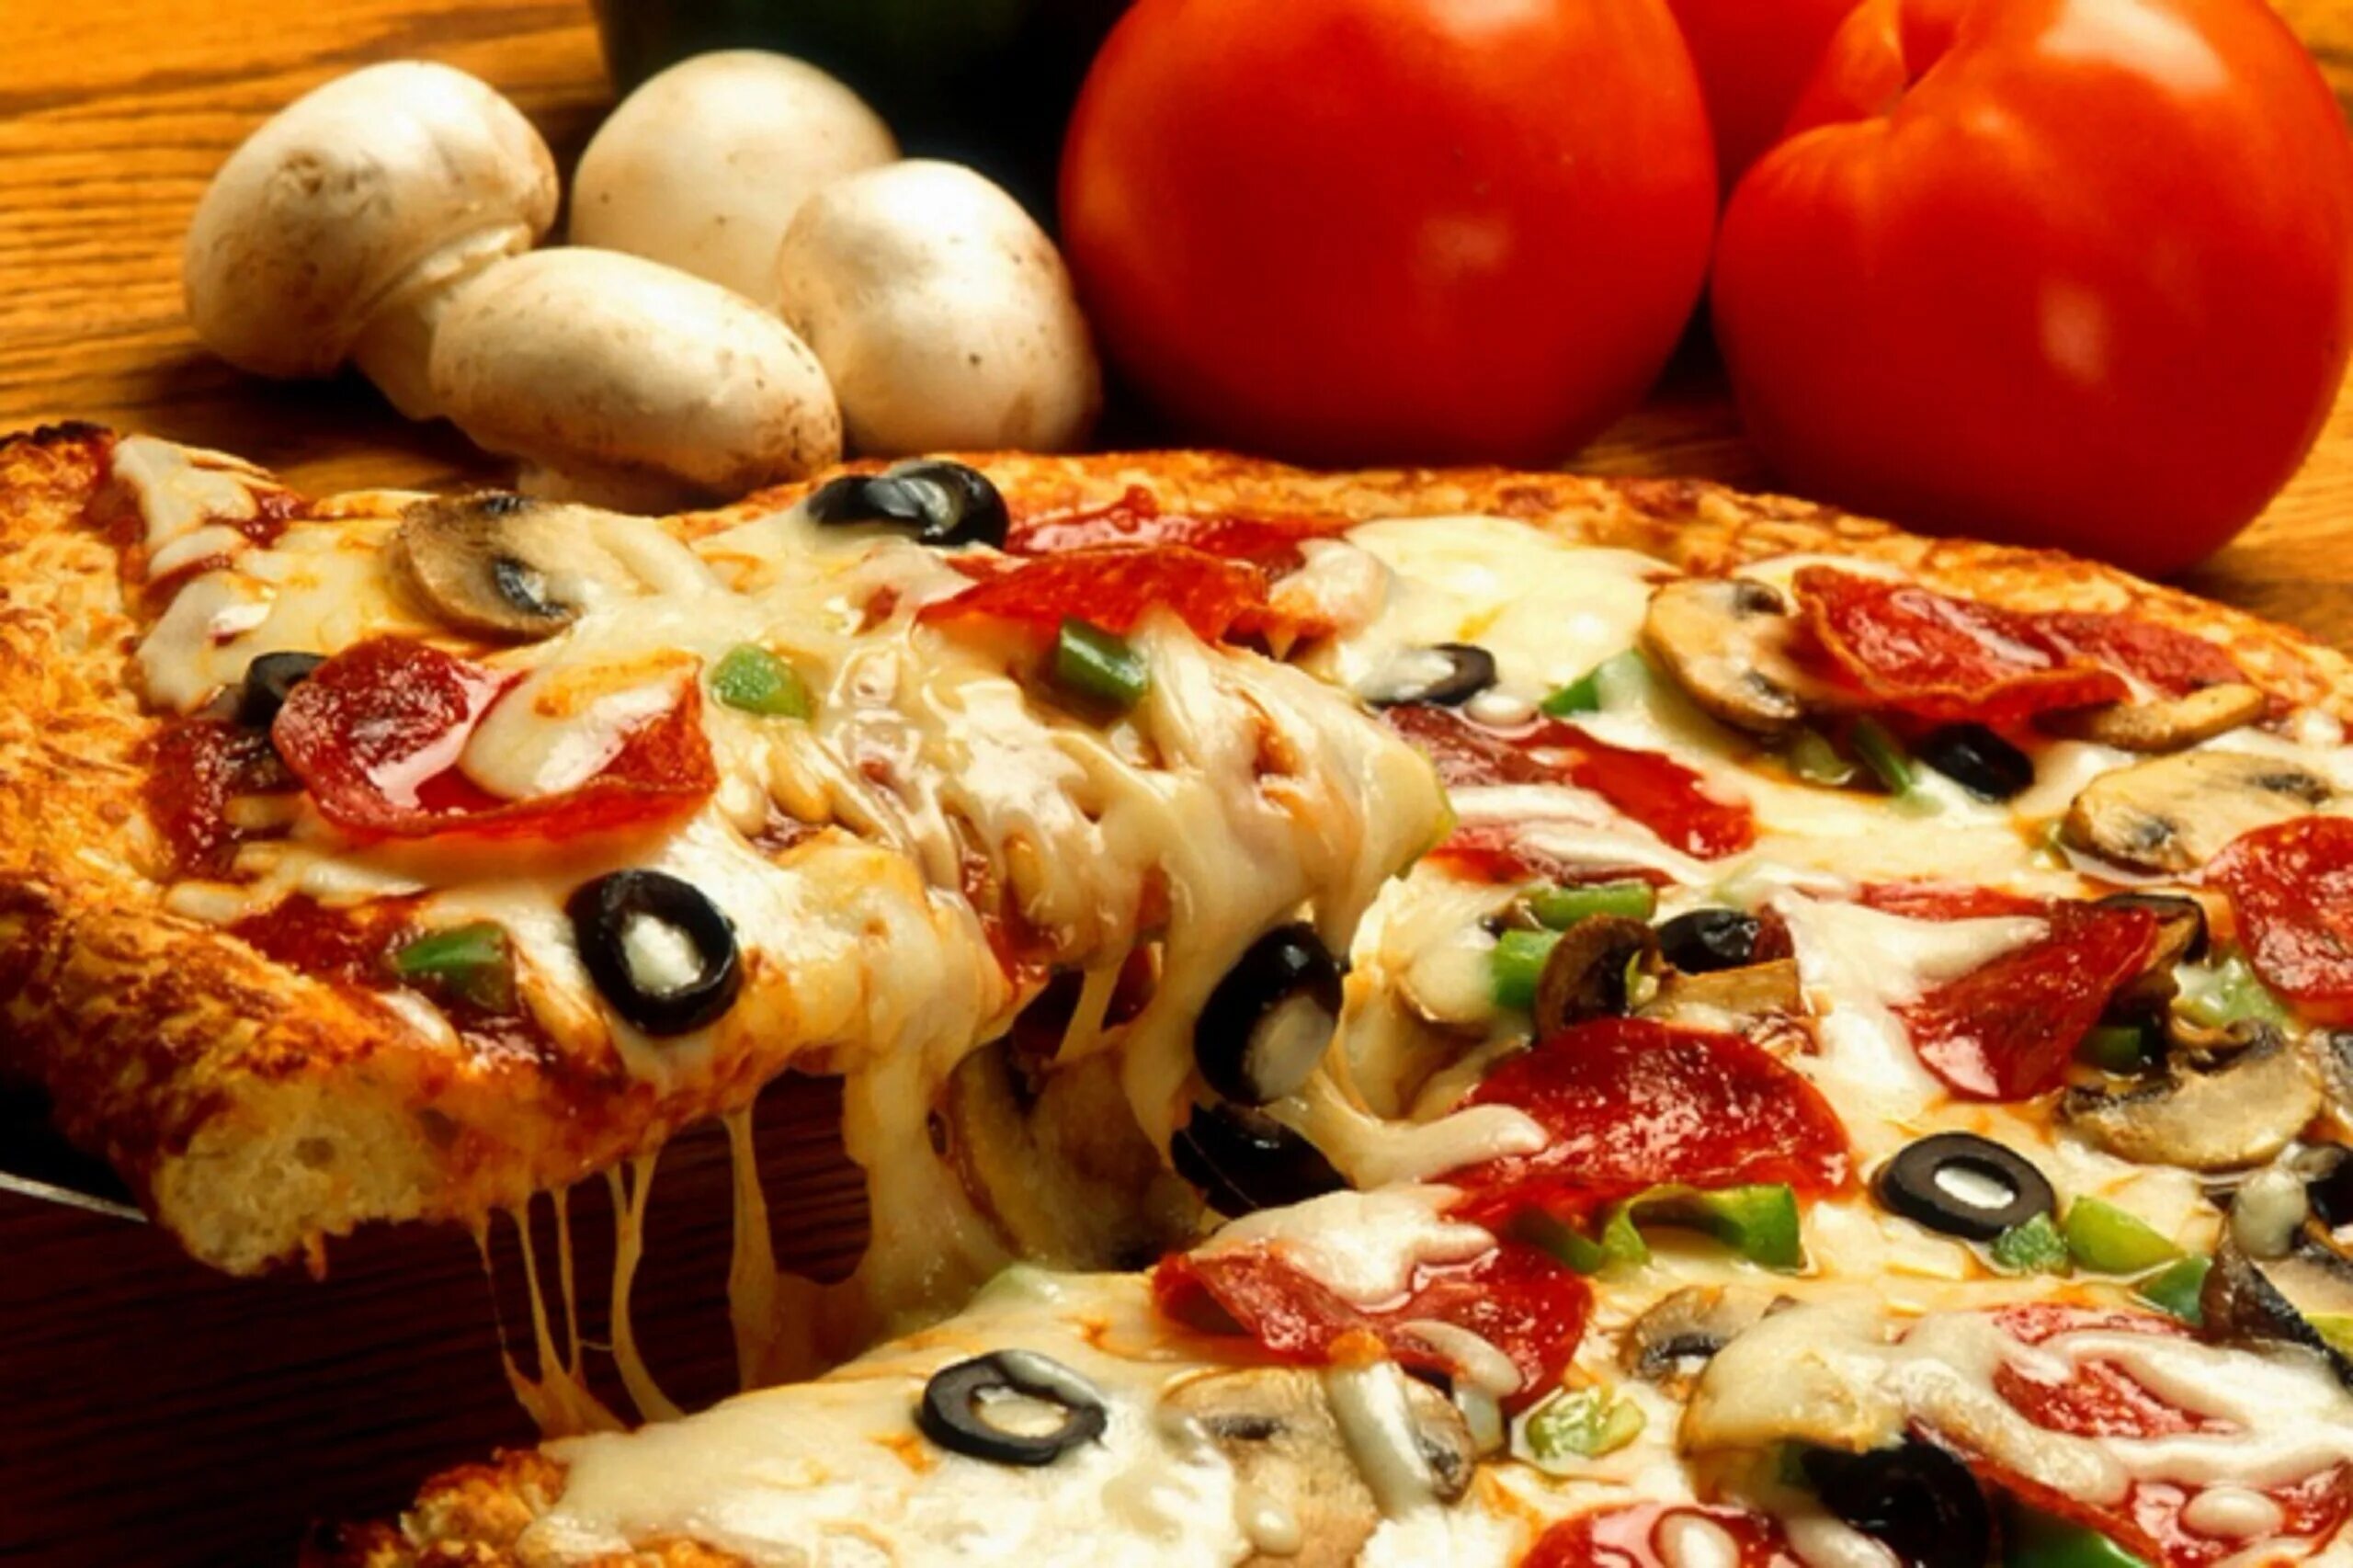 Така пицца. "Пицца". Оригинальная итальянская пицца. Пицца пи. Сочная пицца.